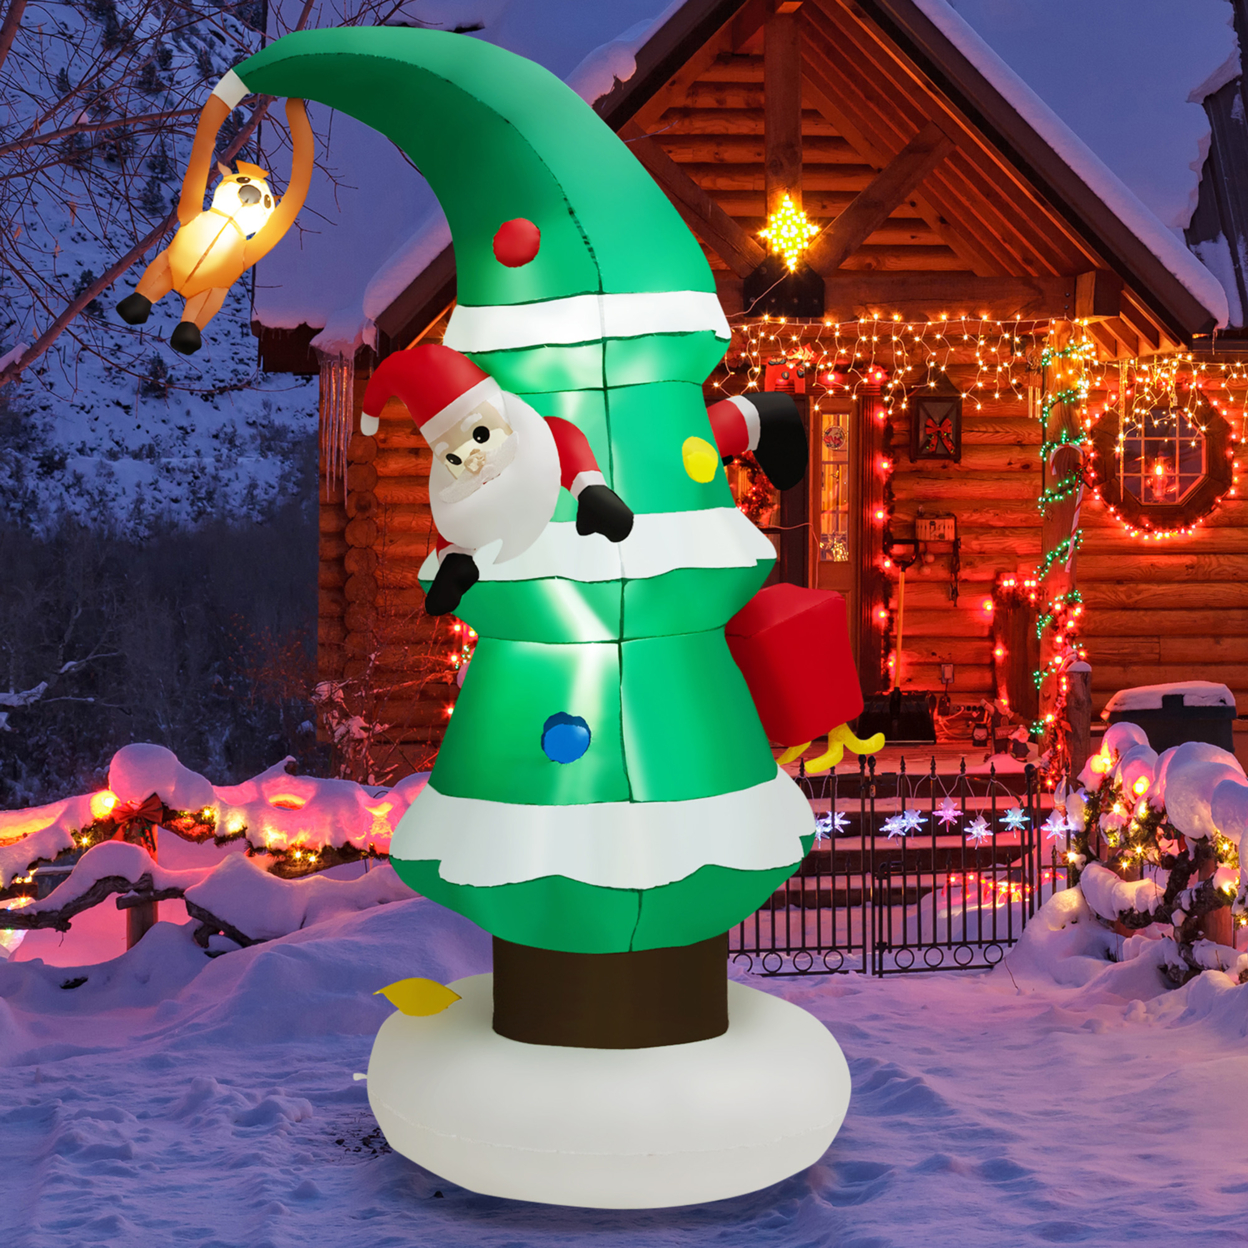 8FT Christmas Inflatable Tree & Santa Claus Yard Decor W/ Air Blower & LED Lights